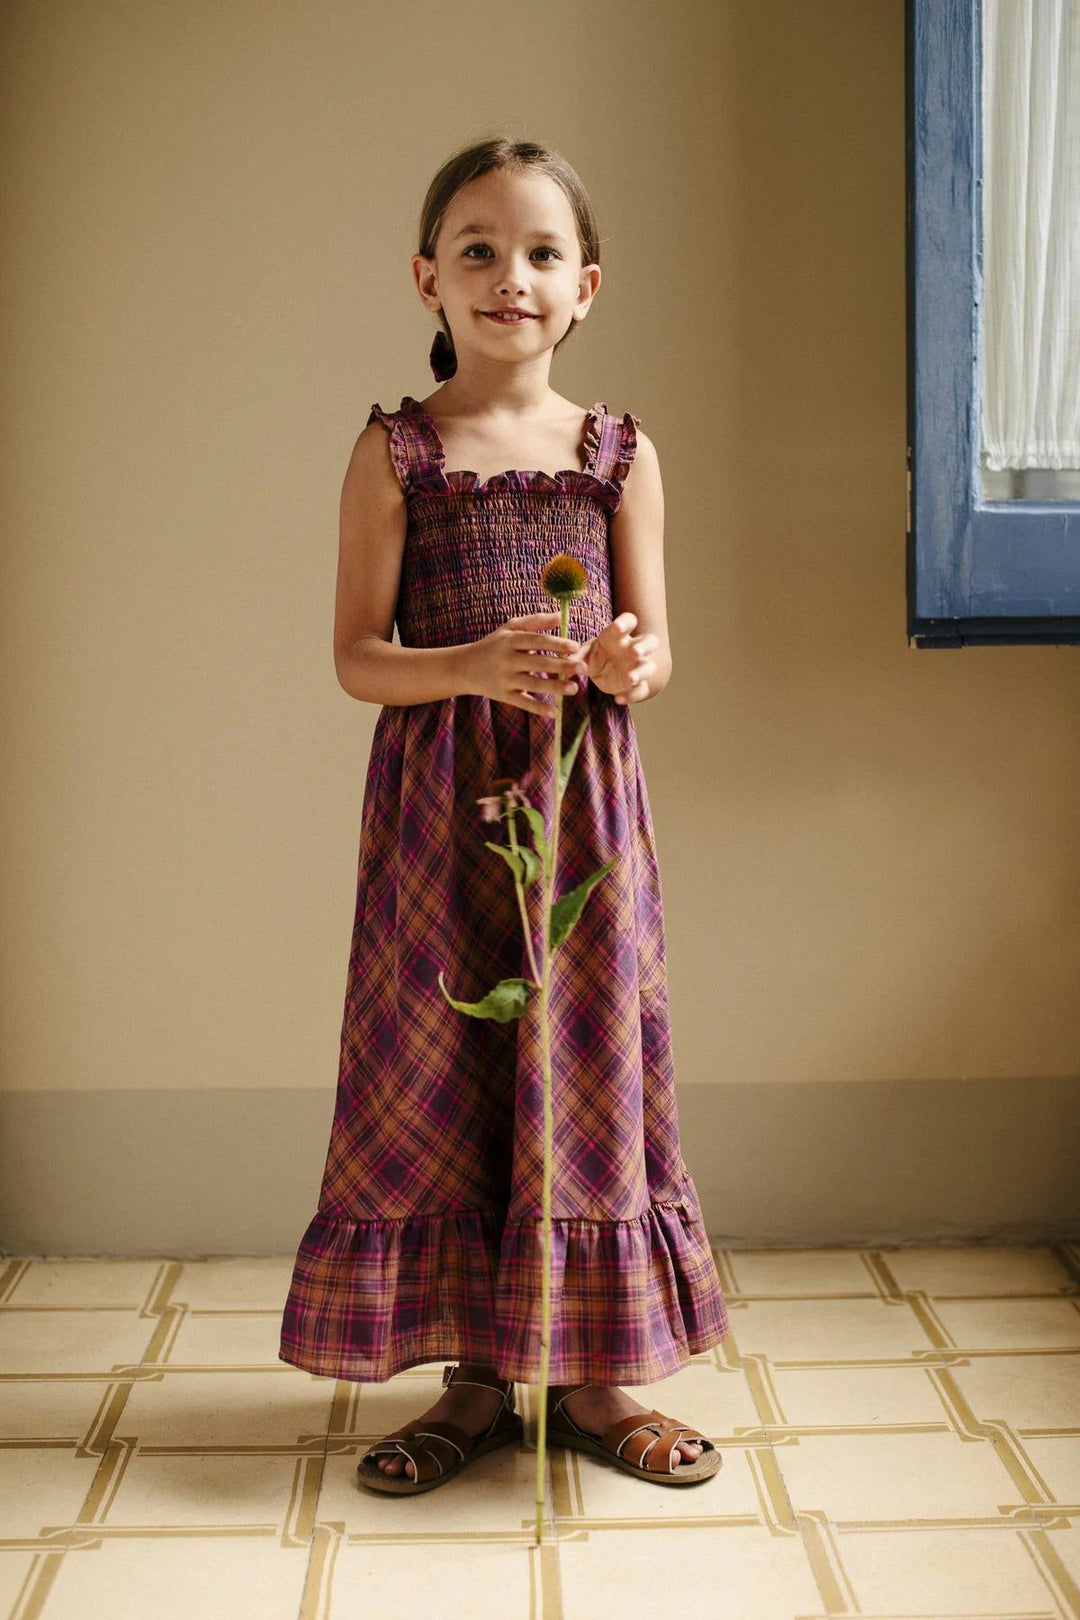 Valentina Dress - Nostalgic Rose Check Dresses + Skirts Bebe Organic 